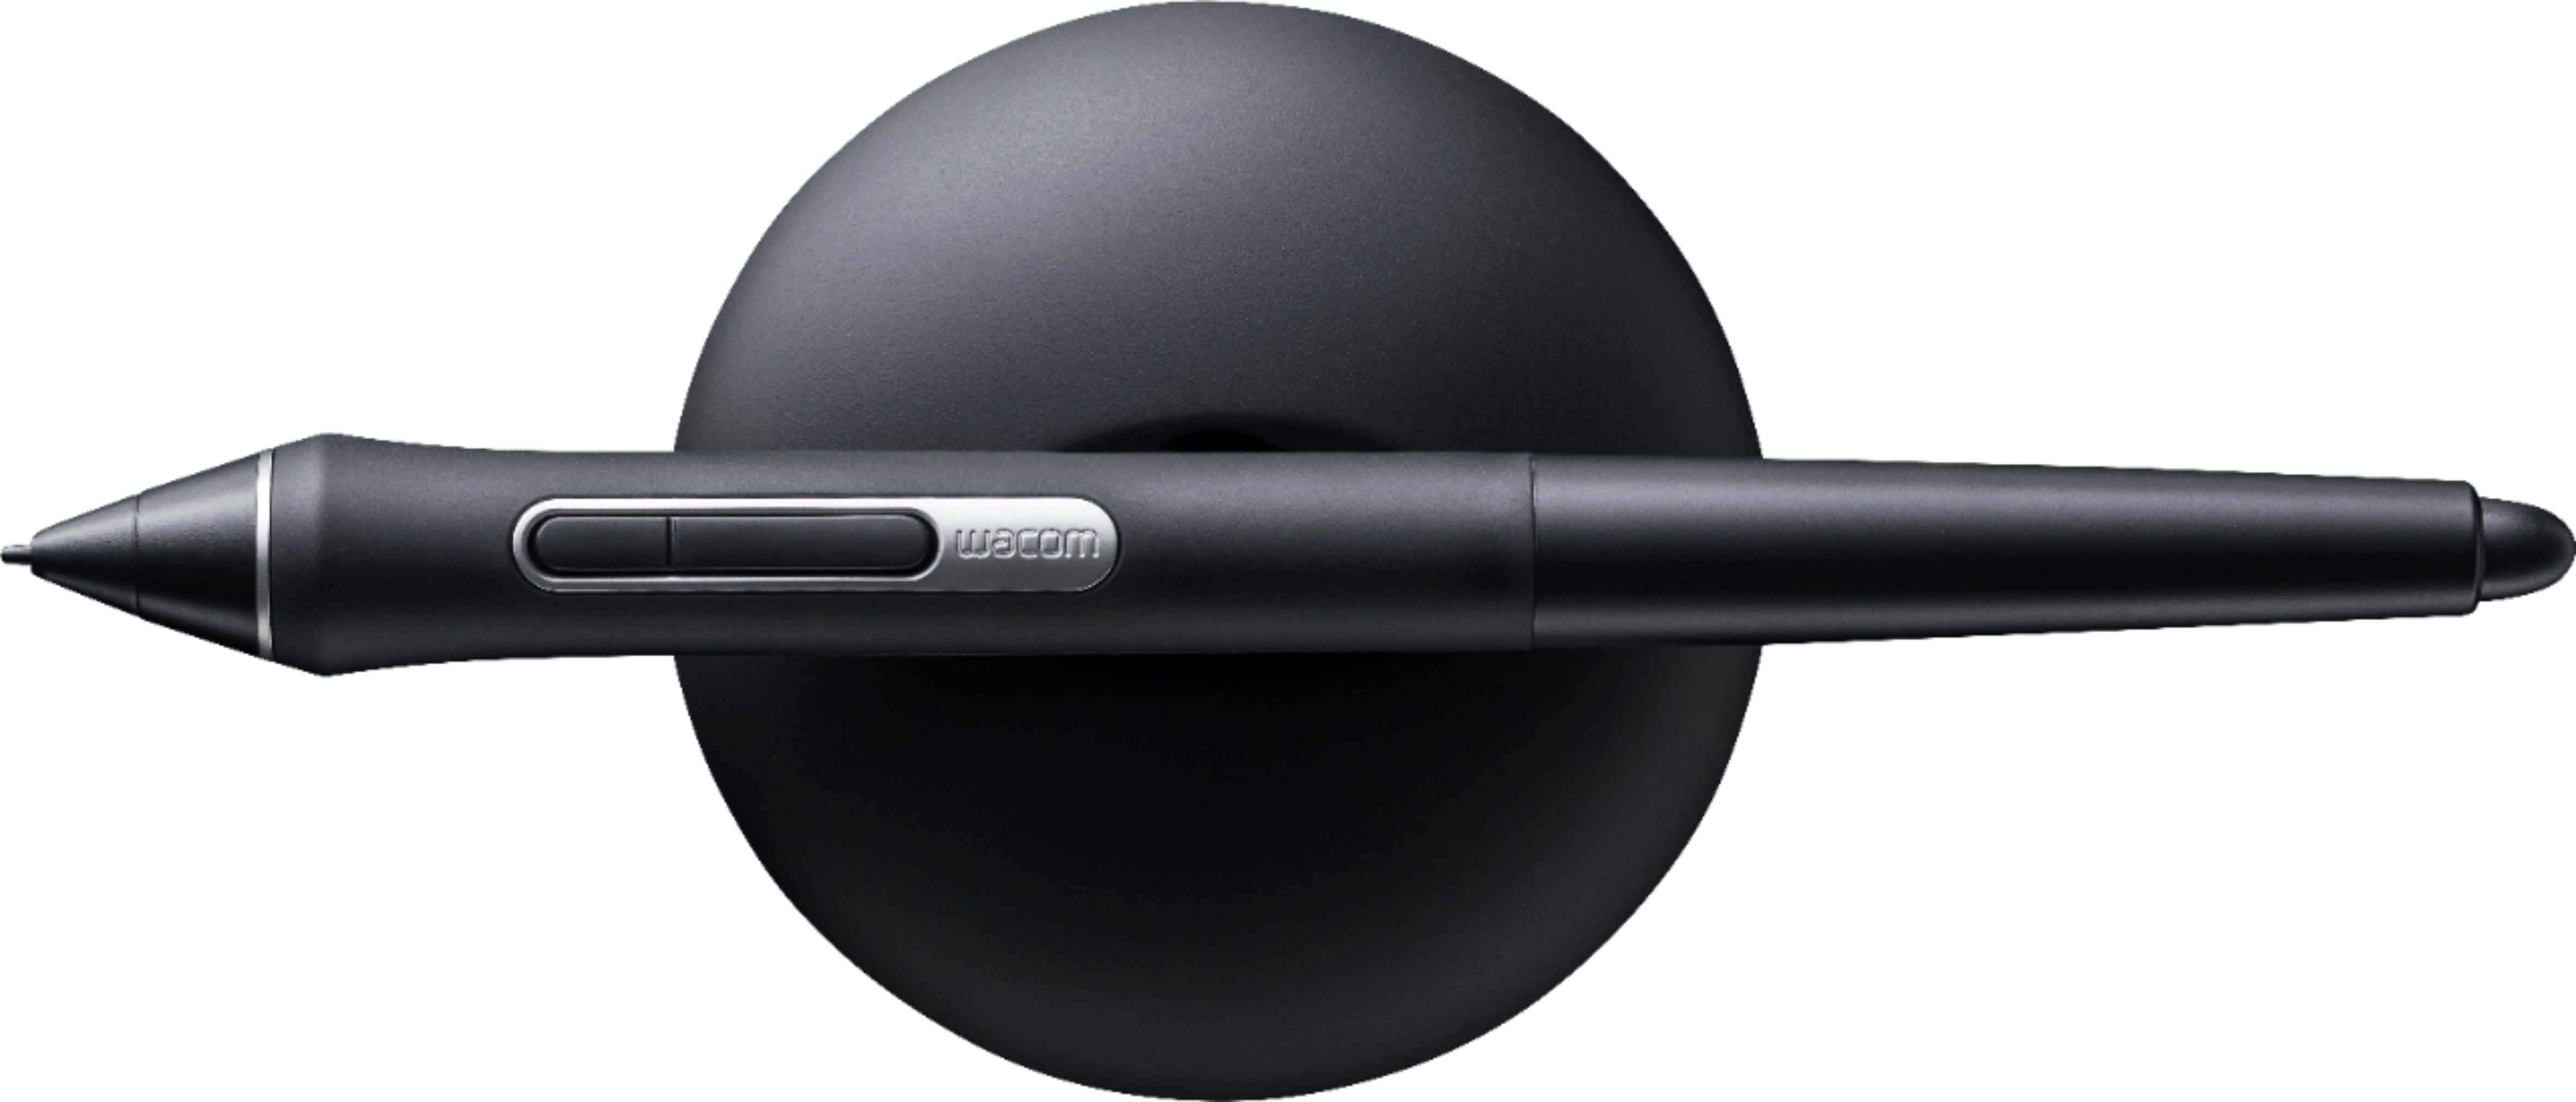 Wacom Intuos Pro Pen Tablet Small, Black